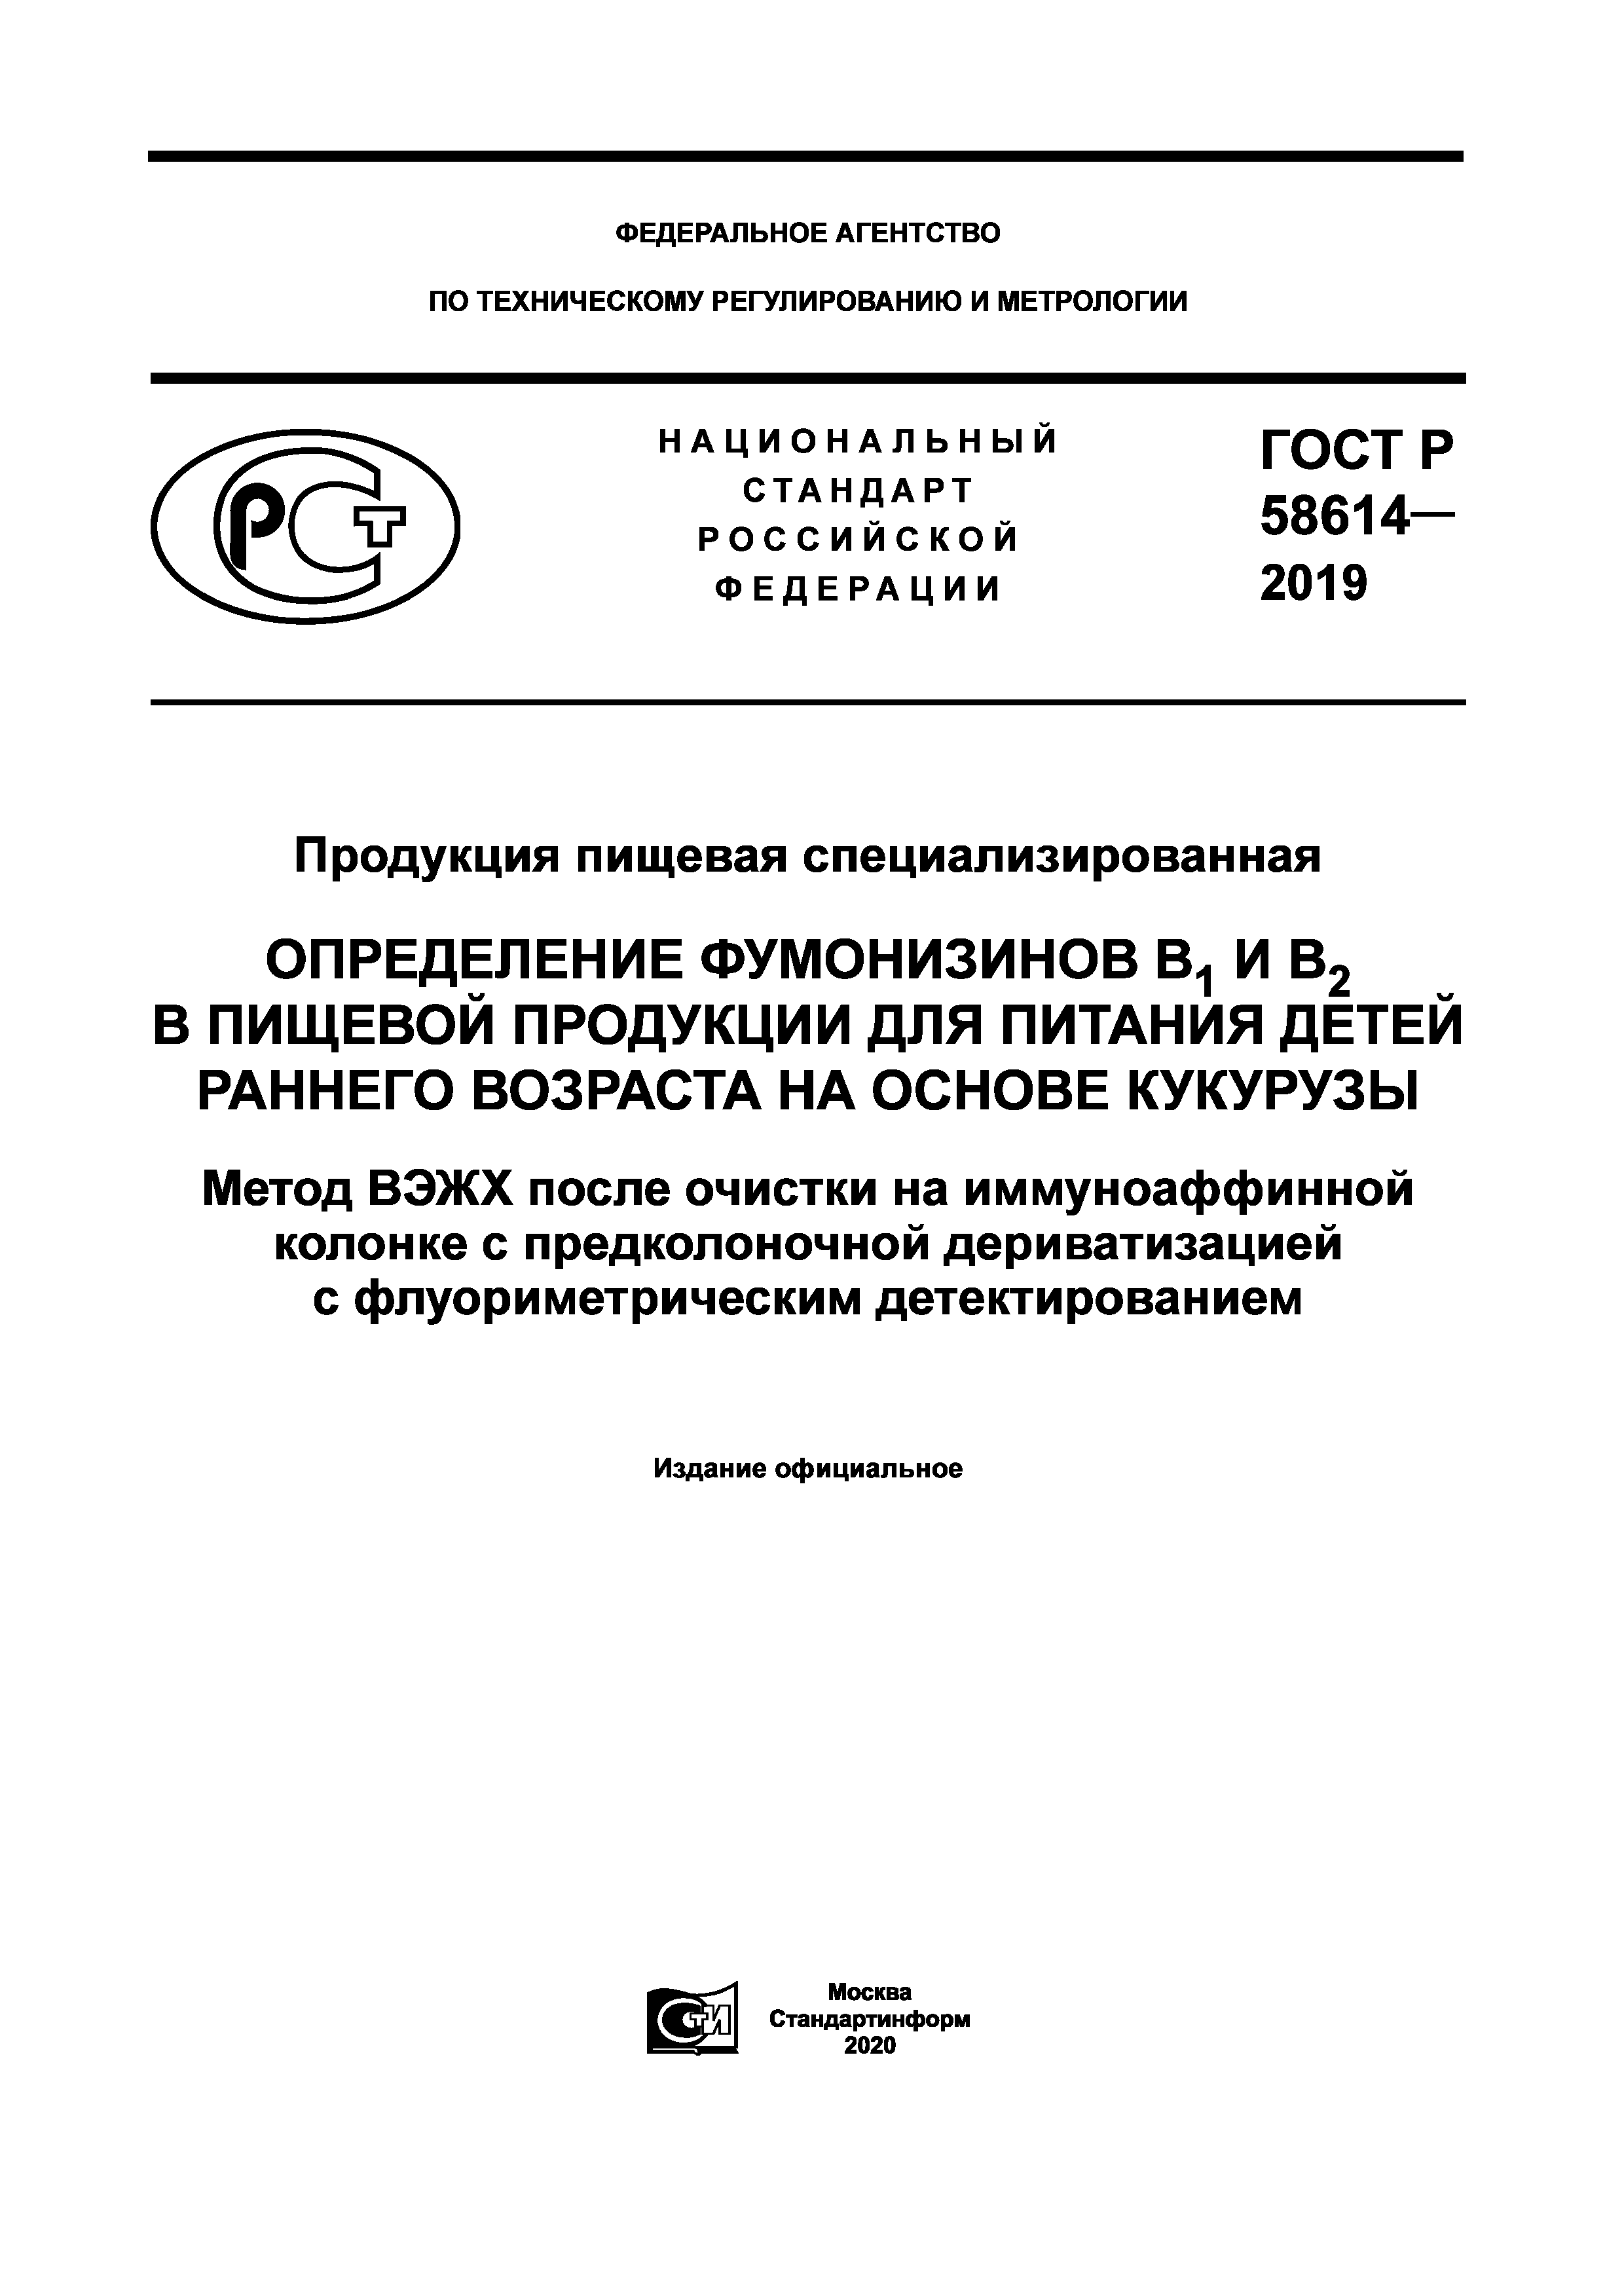 ГОСТ Р 58614-2019